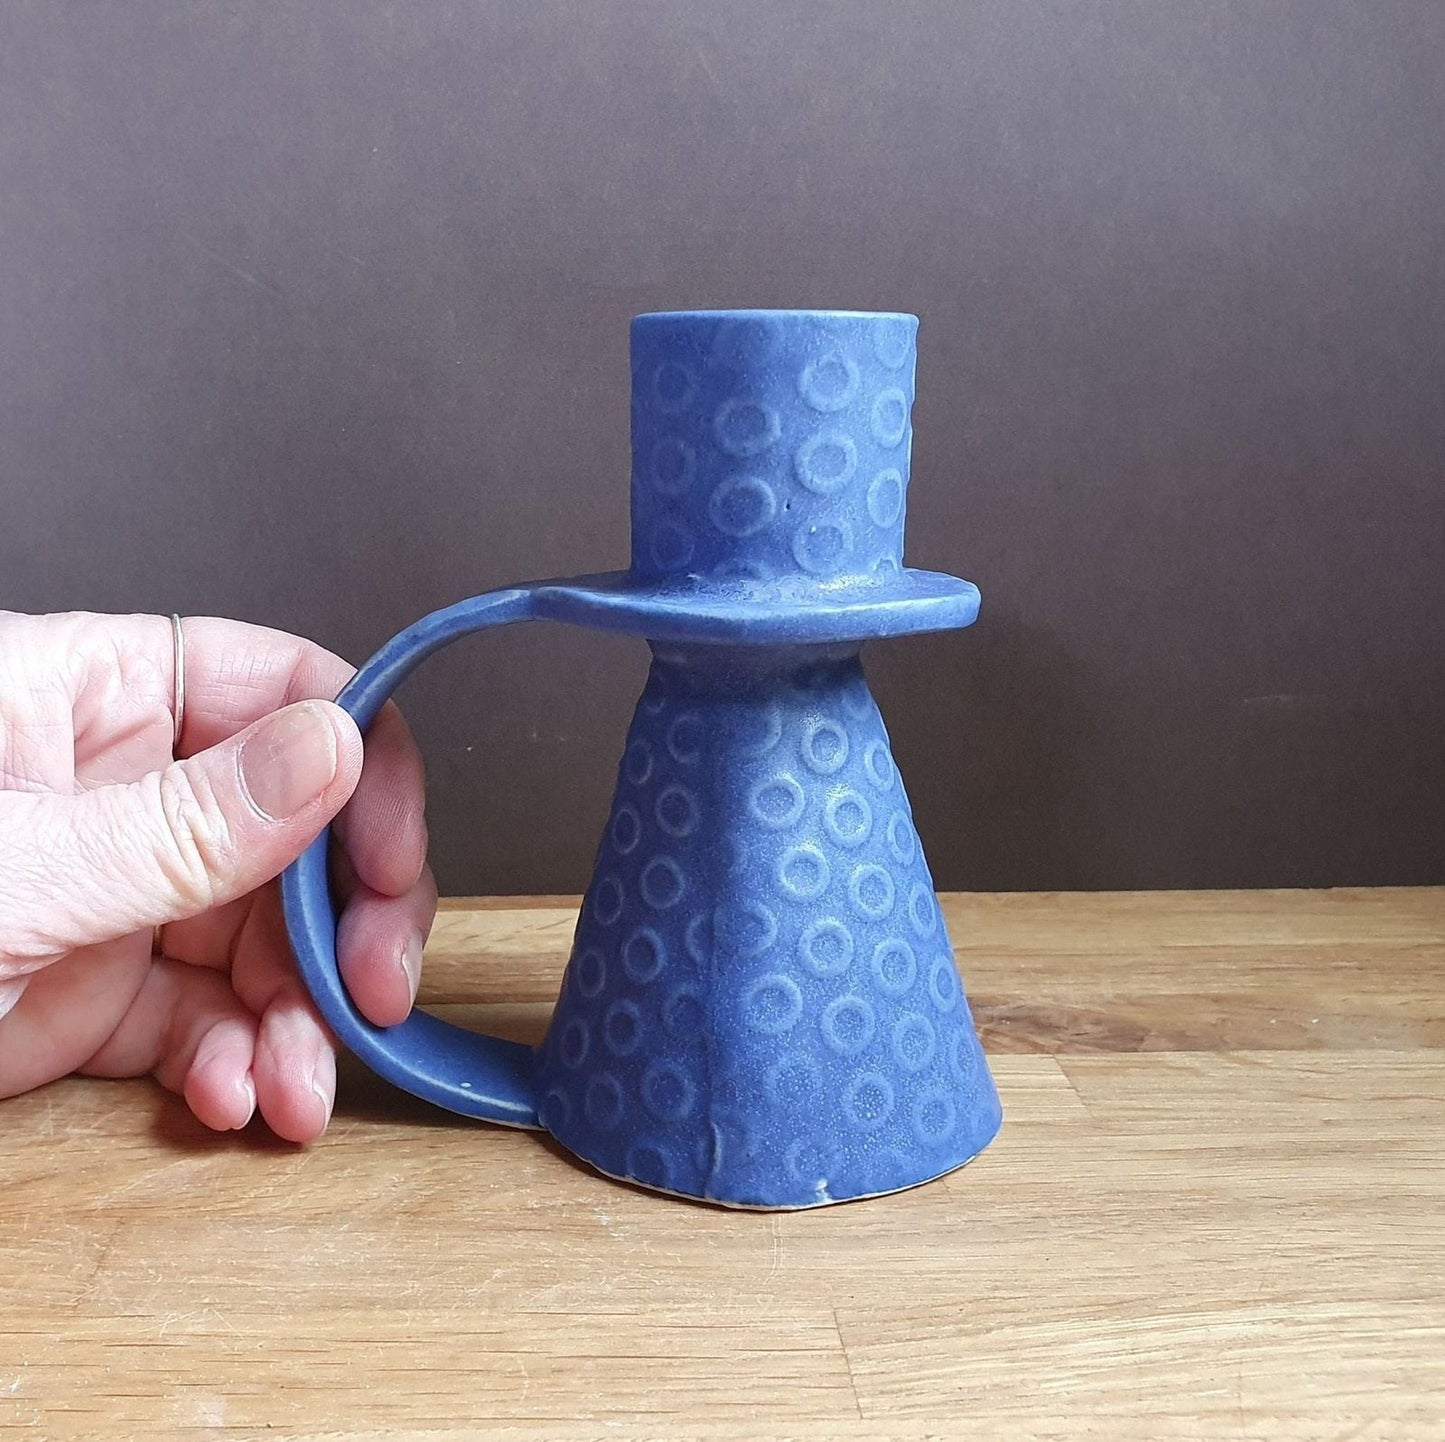 Candle holder in vibrant cobalt blue handmade stoneware